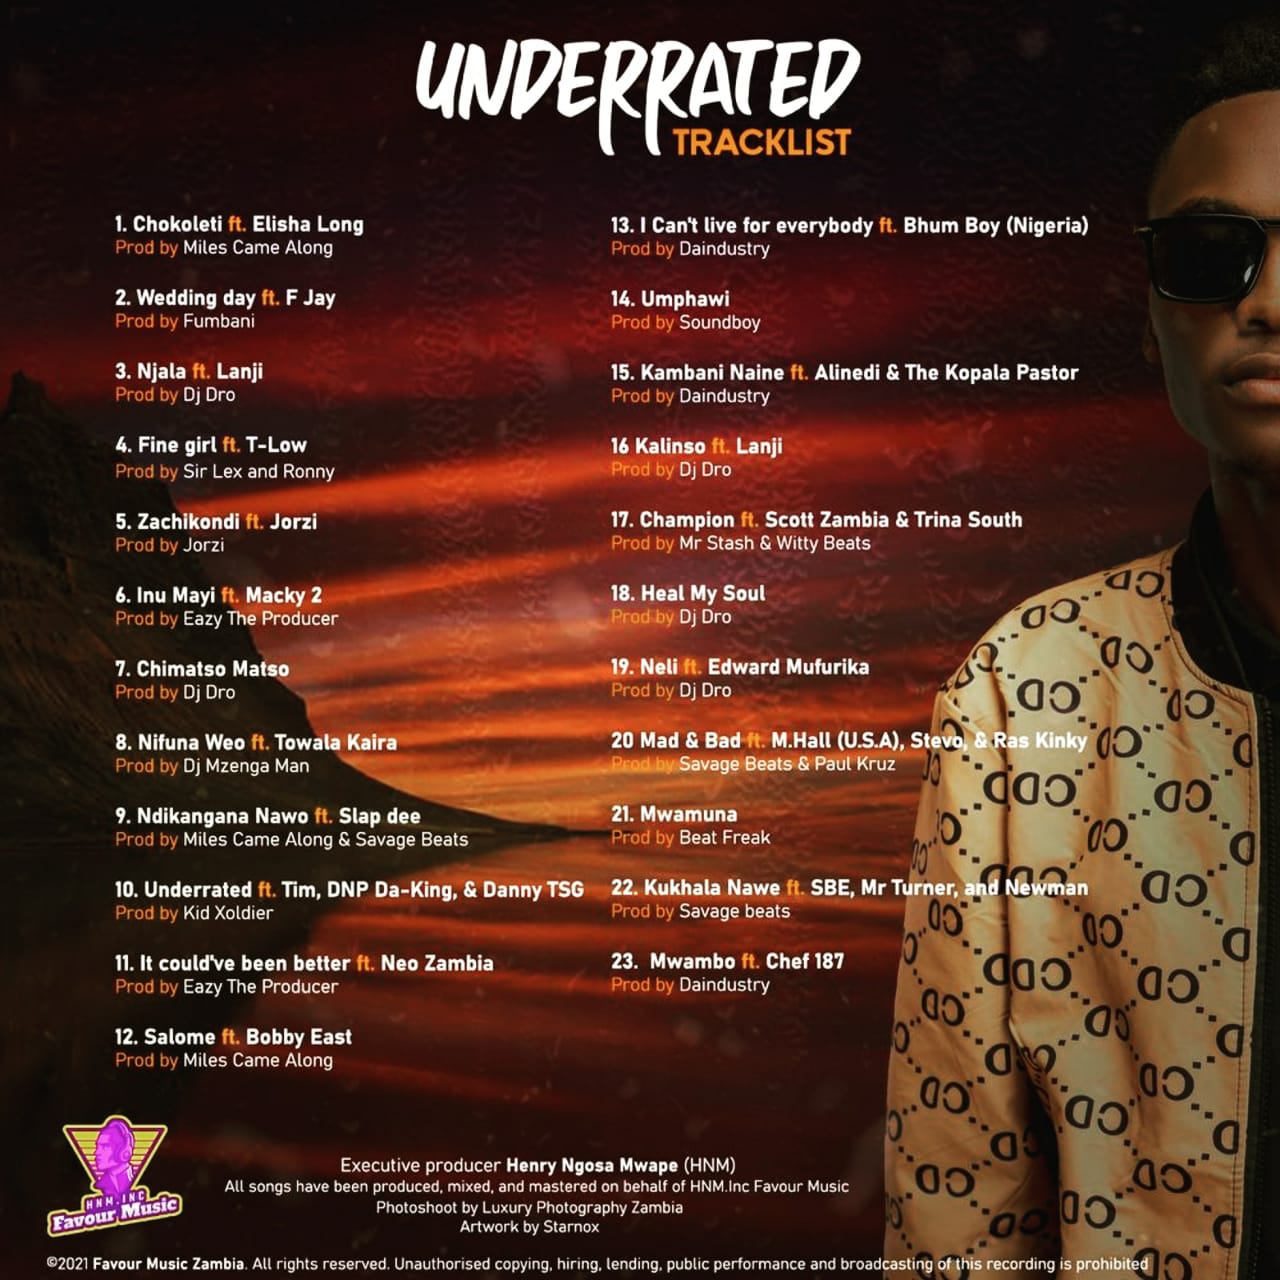 Goddy Zambia set to release 'Underrated' album